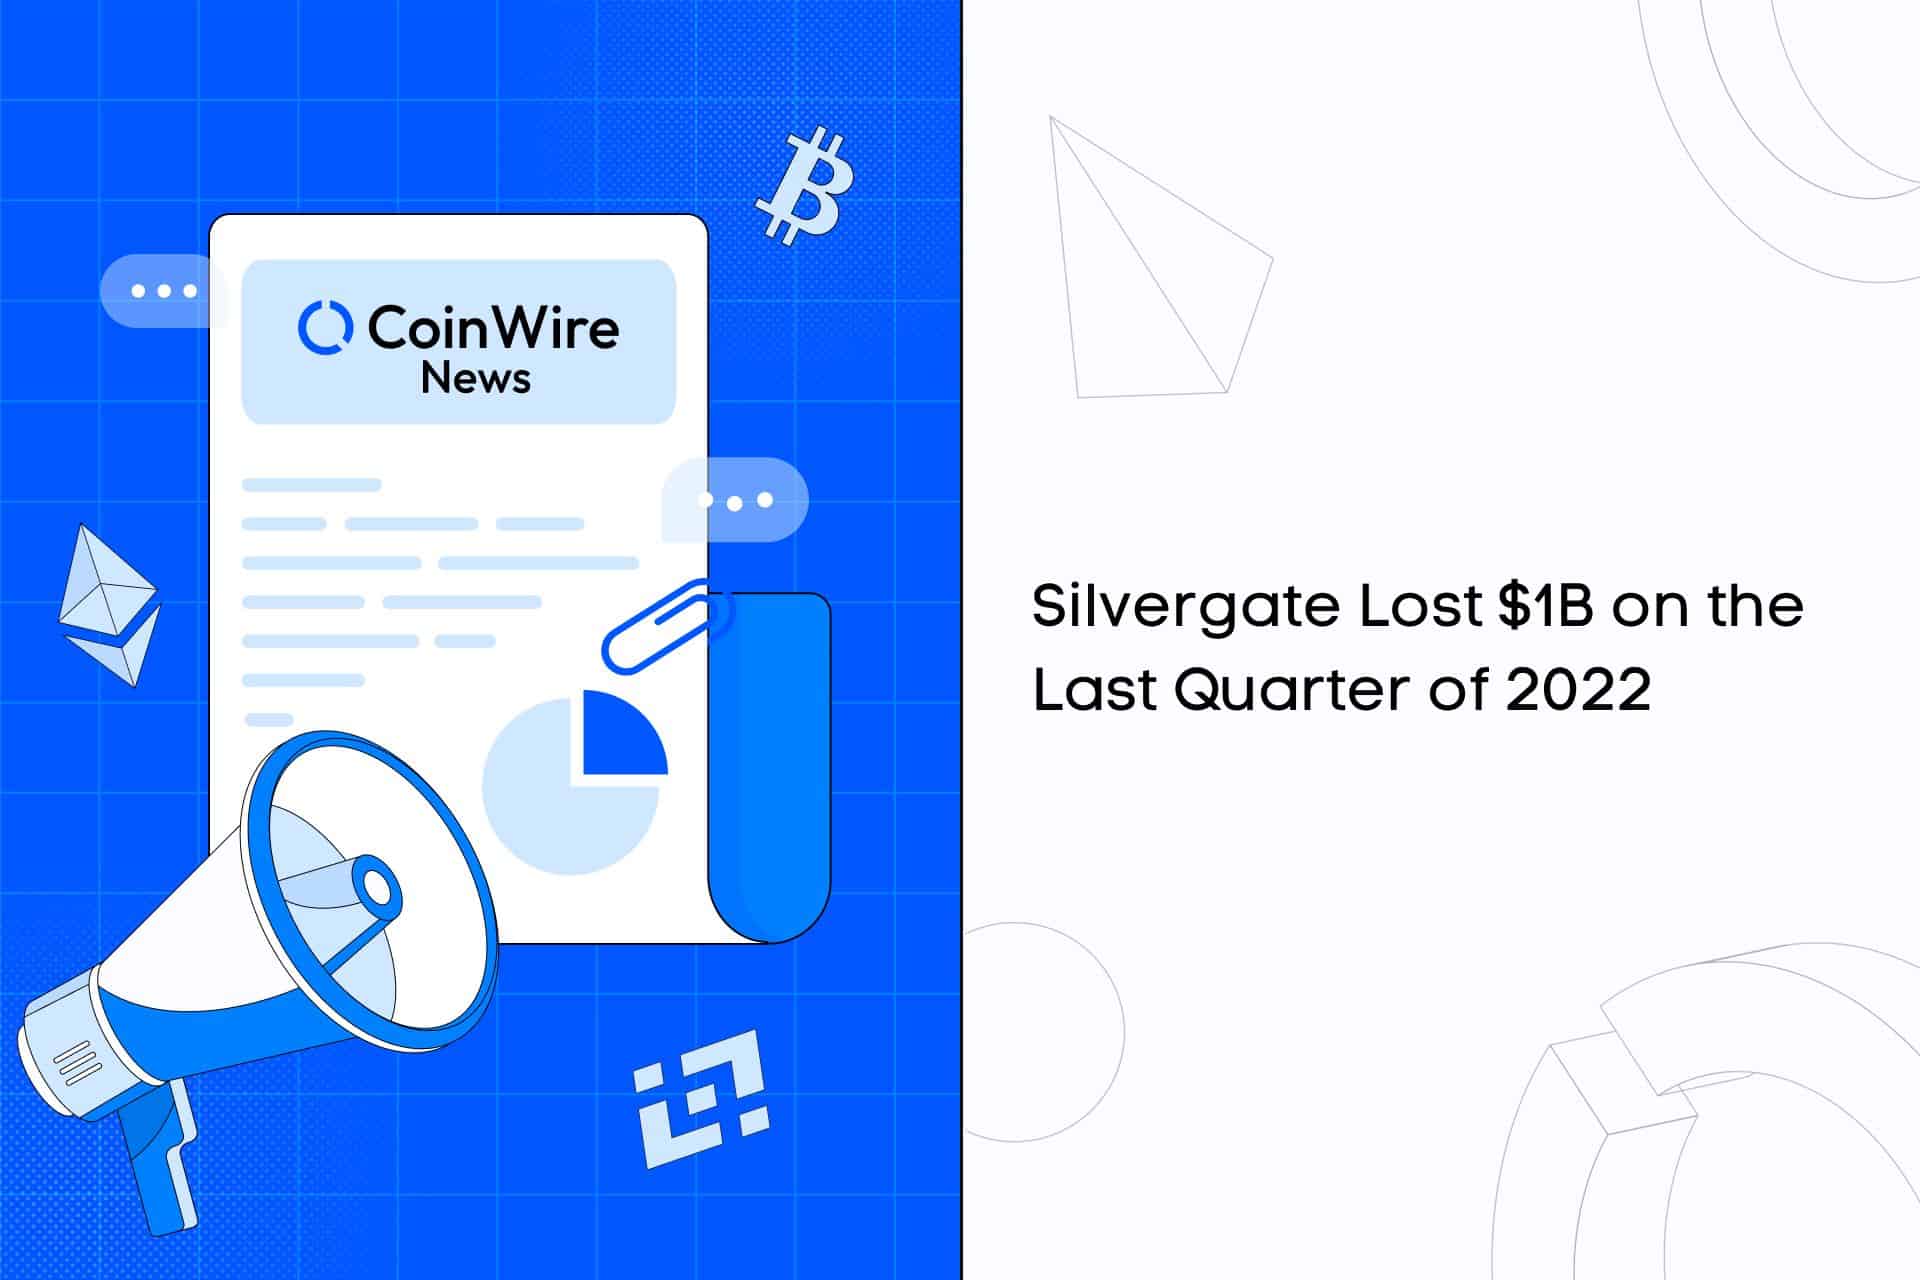 Silvergate Lost $1B On The Last Quarter Of 2022